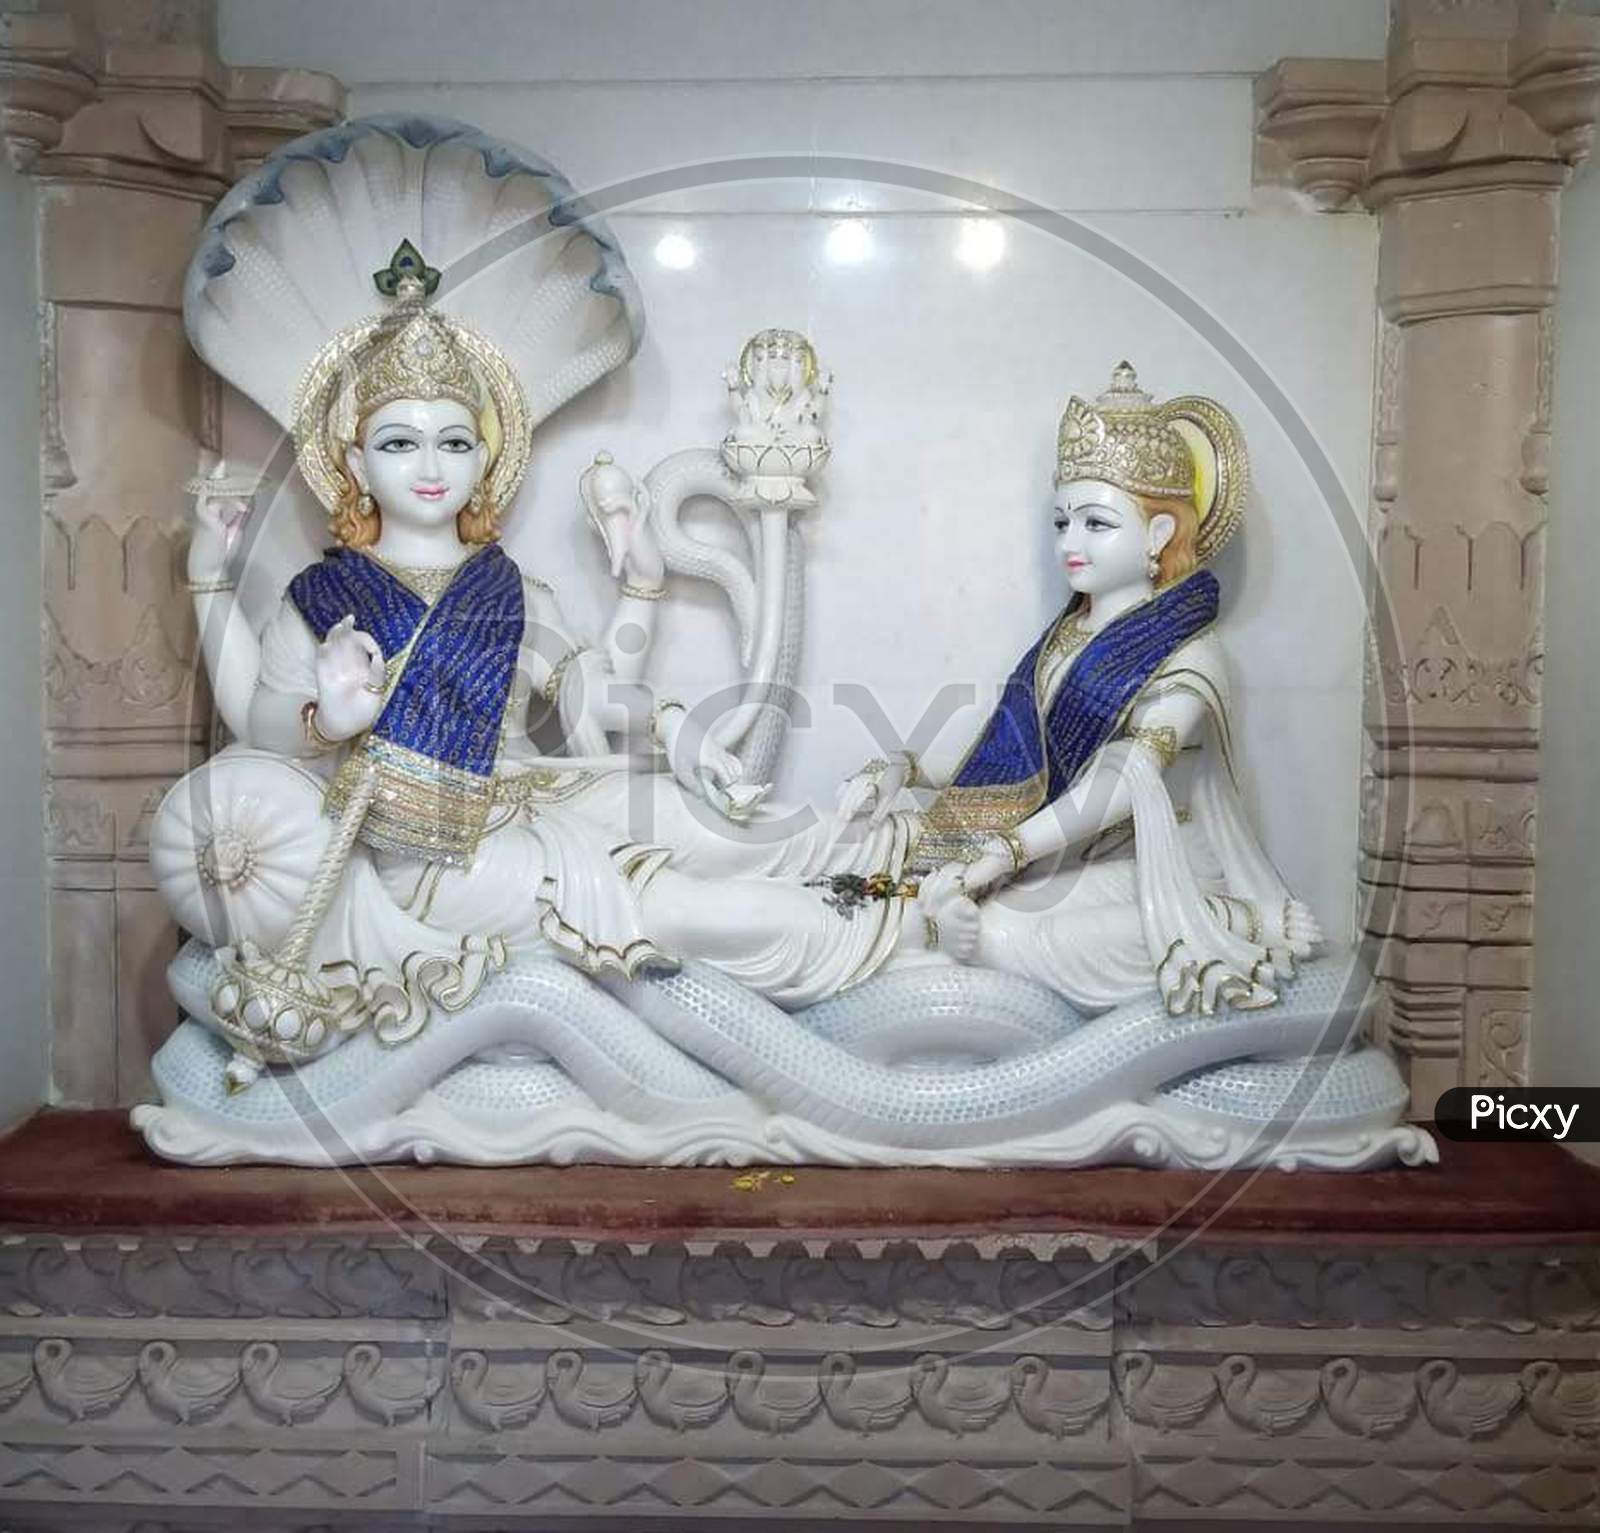 Vishnu and Laxmi architecture